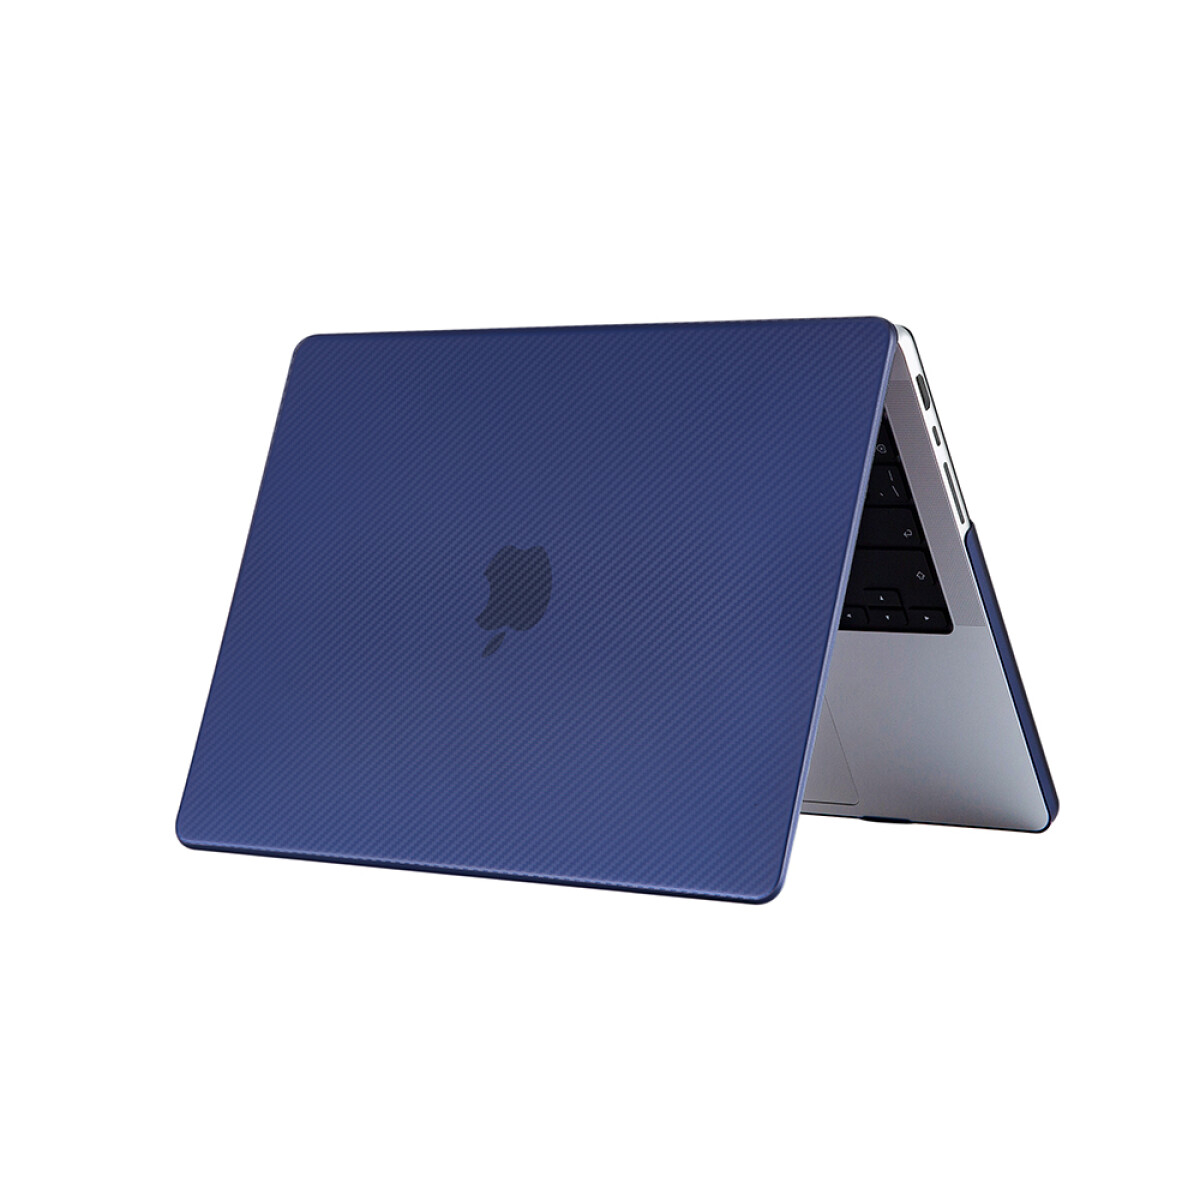 Carcasa protector hardsell fibra carbono para macbook air 13.3' devia Peony blue